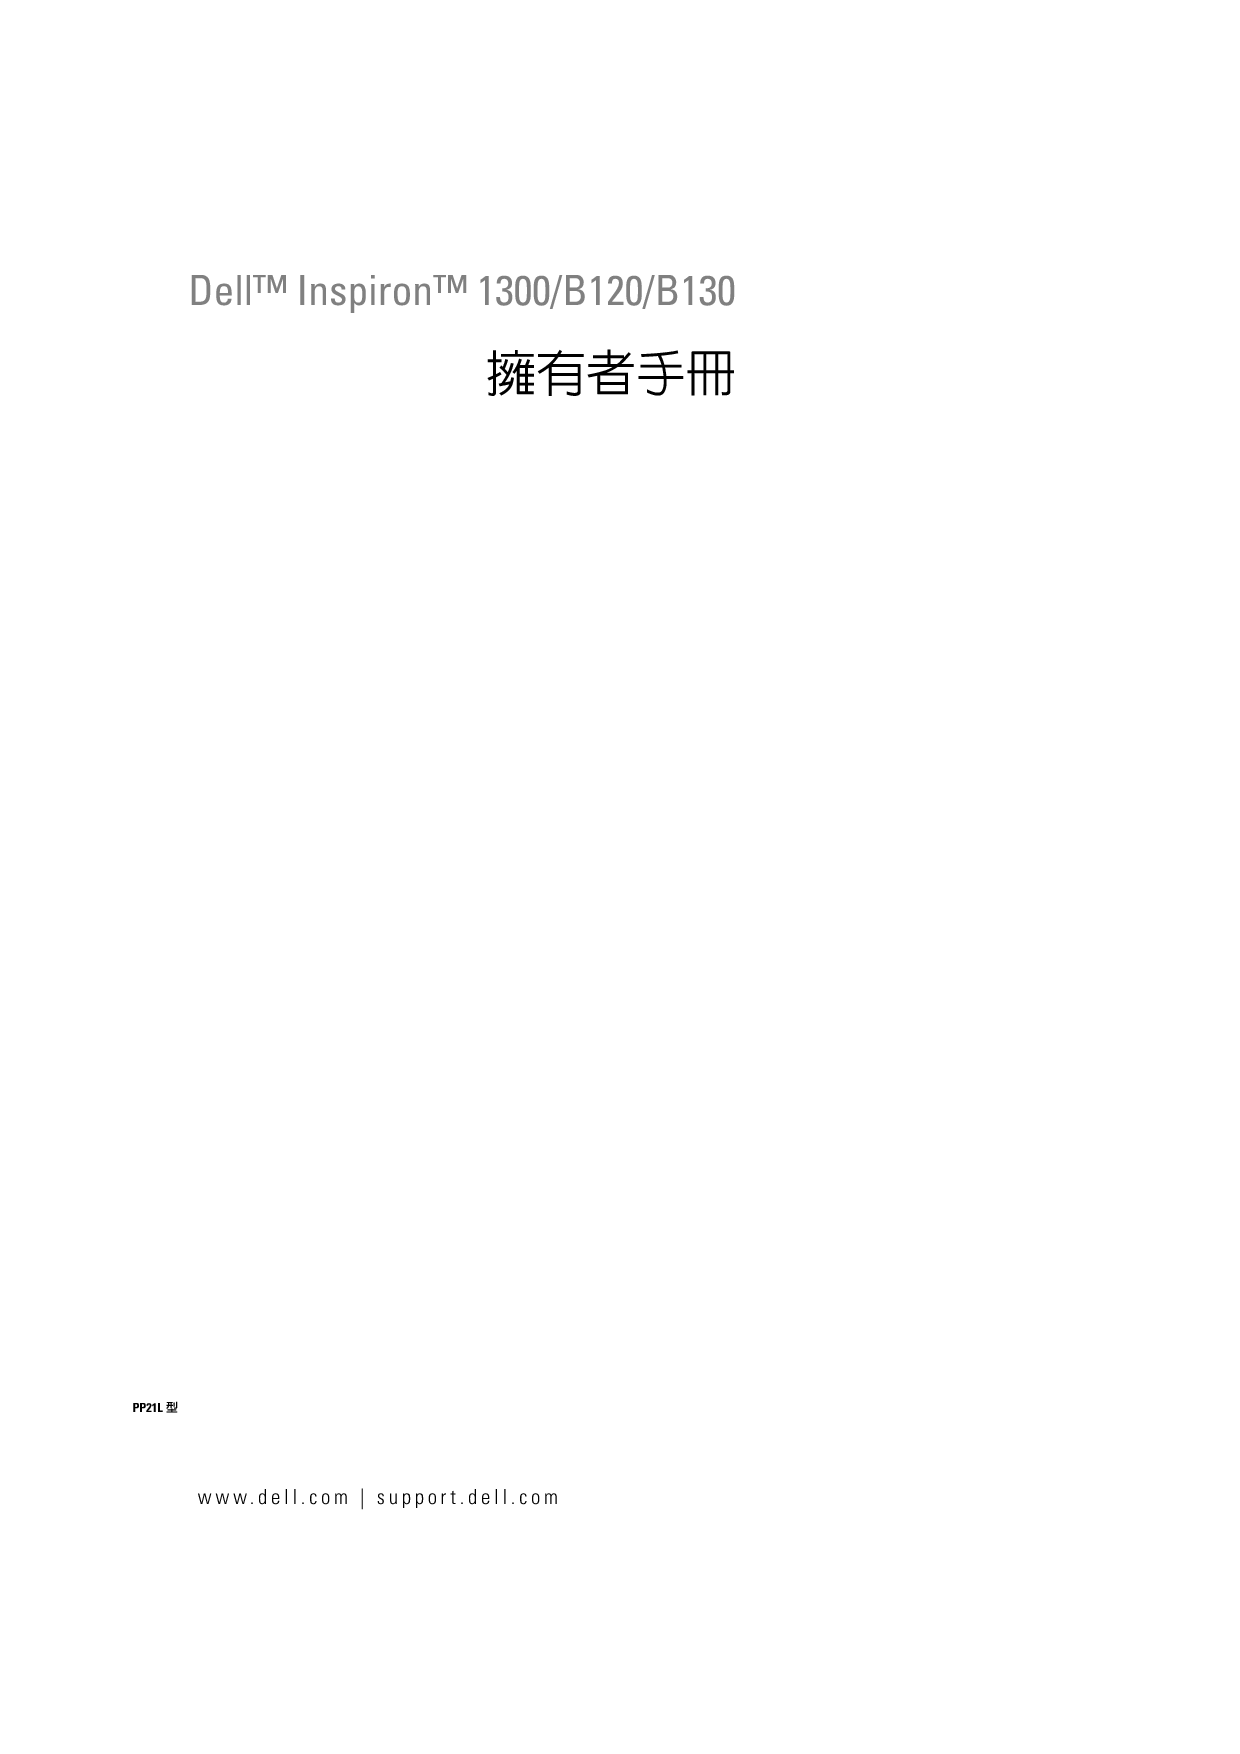 戴尔 Dell Inspiron 1300 繁体 用户手册 封面